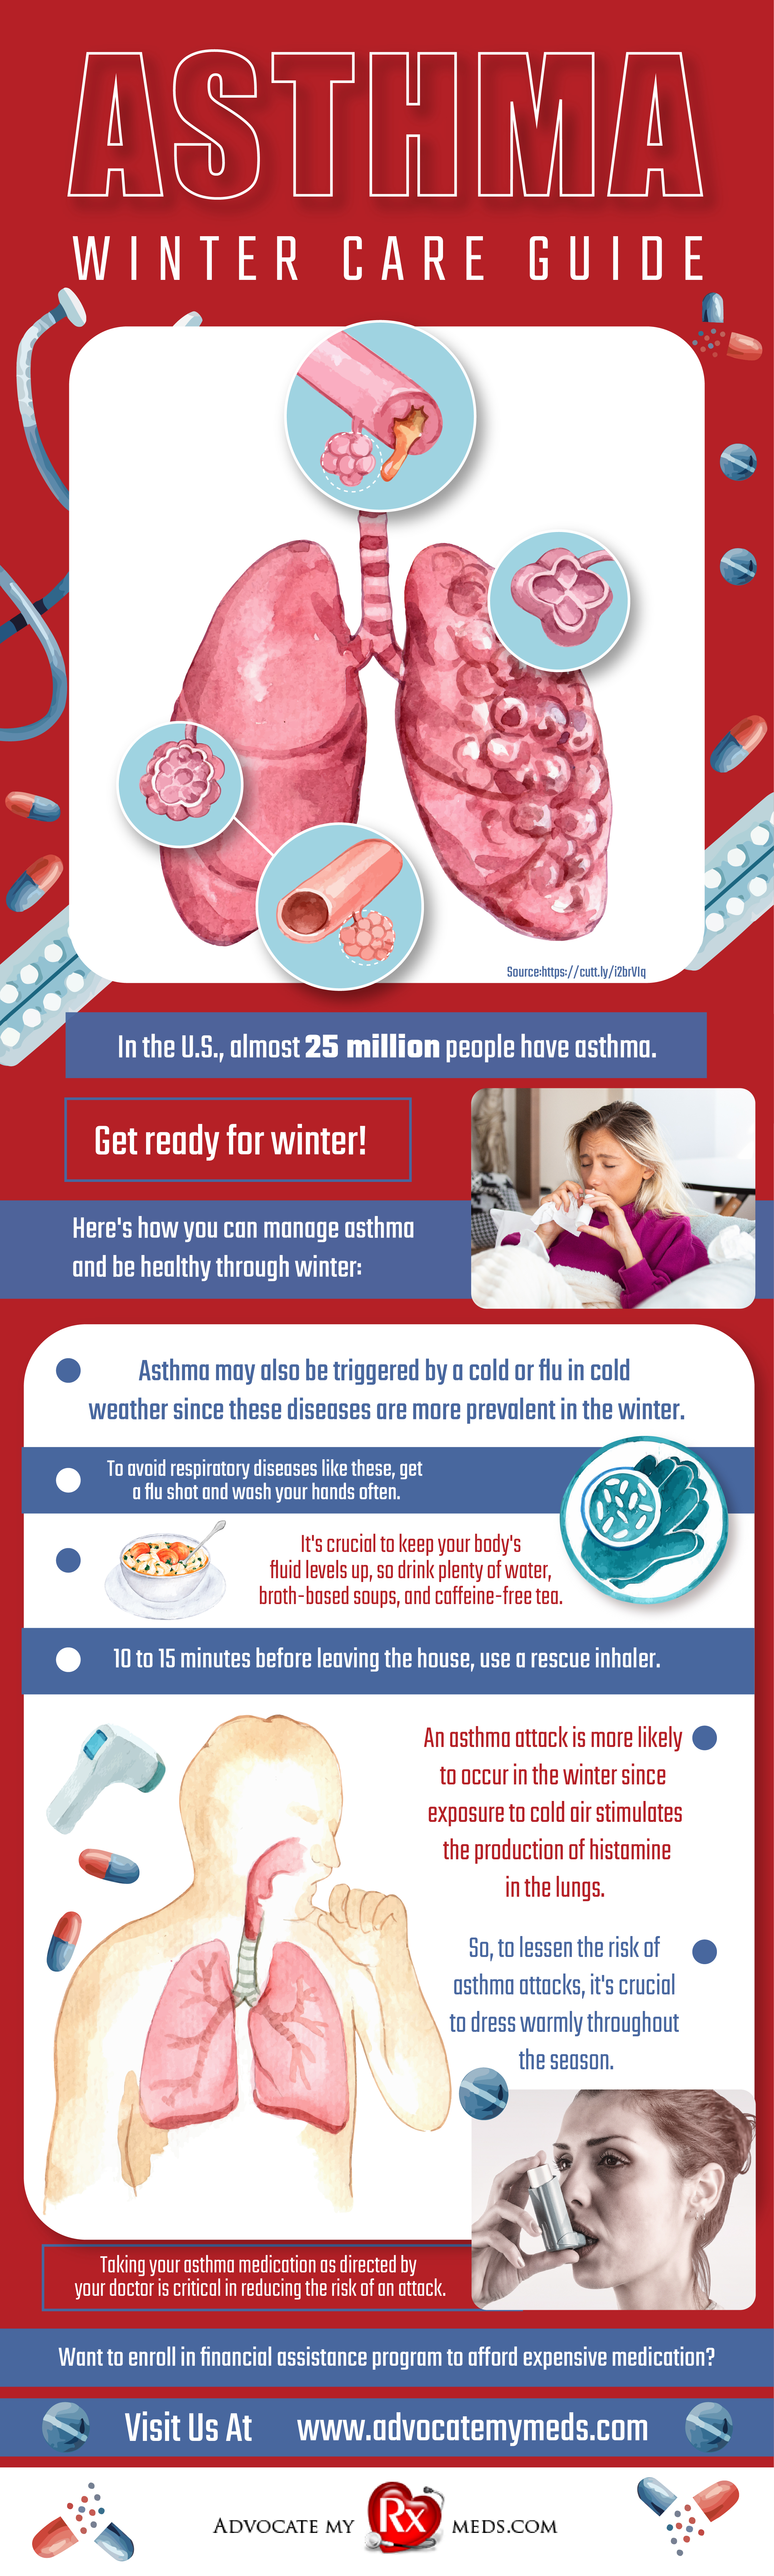 asthma winter care guide